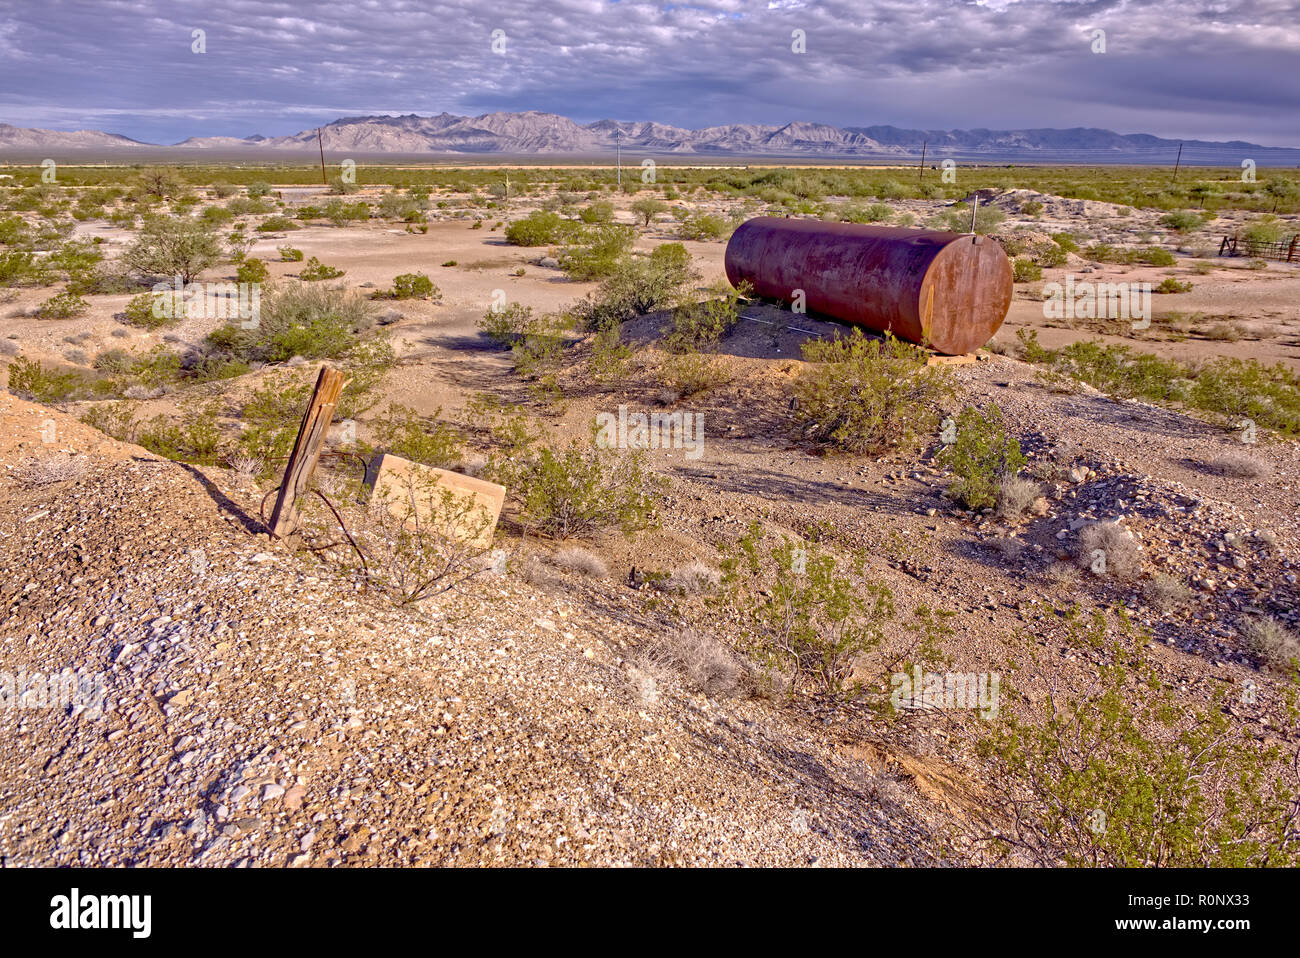 Abandoned rusty water tank, Love, Arizona, United States Stock Photo